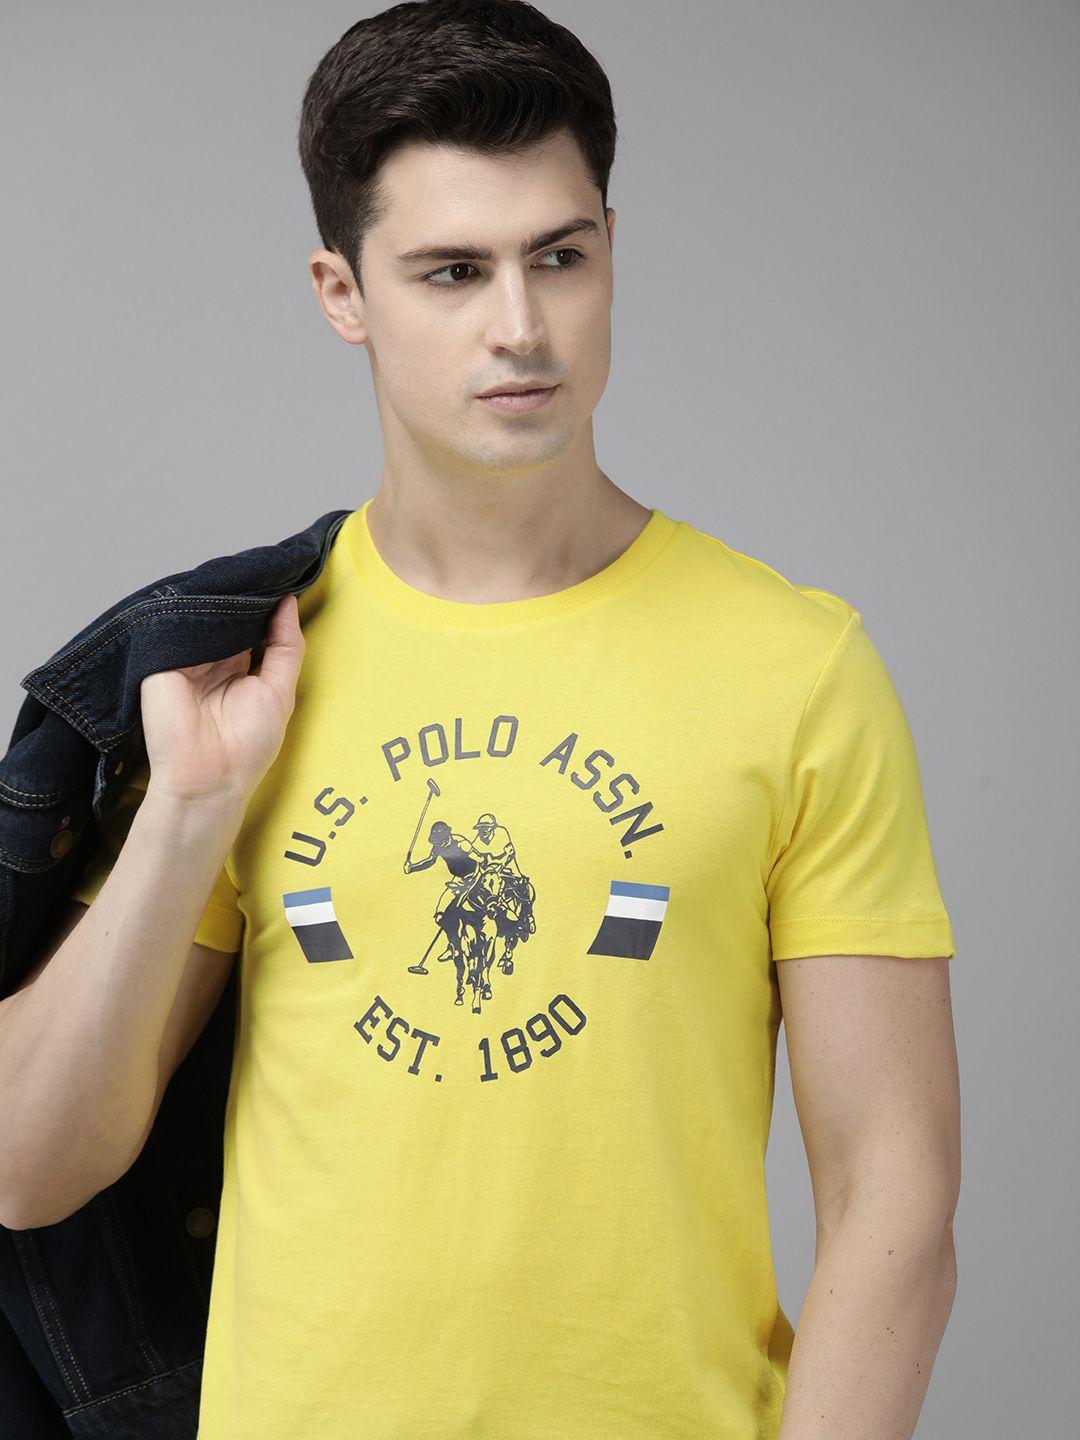 u.s. polo assn. brand logo printed pure cotton slim fit t-shirt